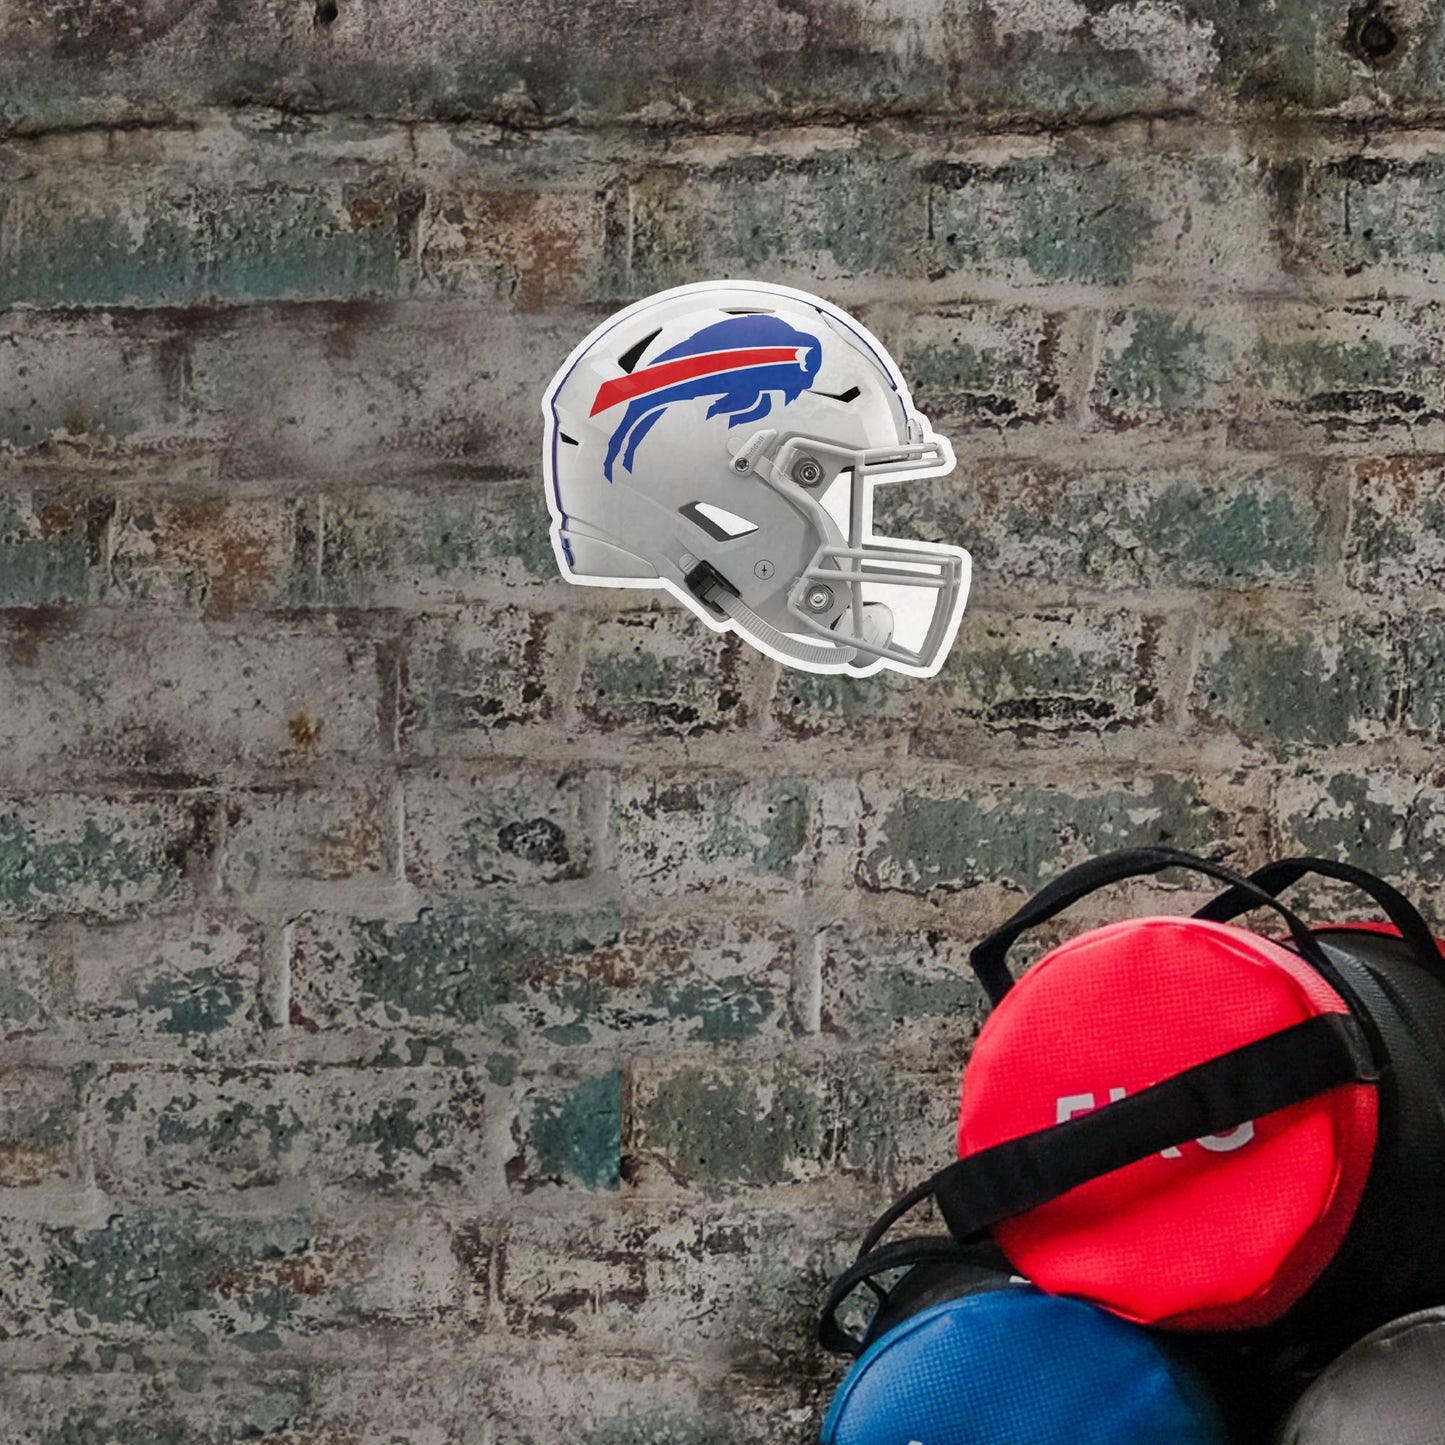 Buffalo Bills: Outdoor Helmet - Officially Licensed NFL Outdoor Graphic